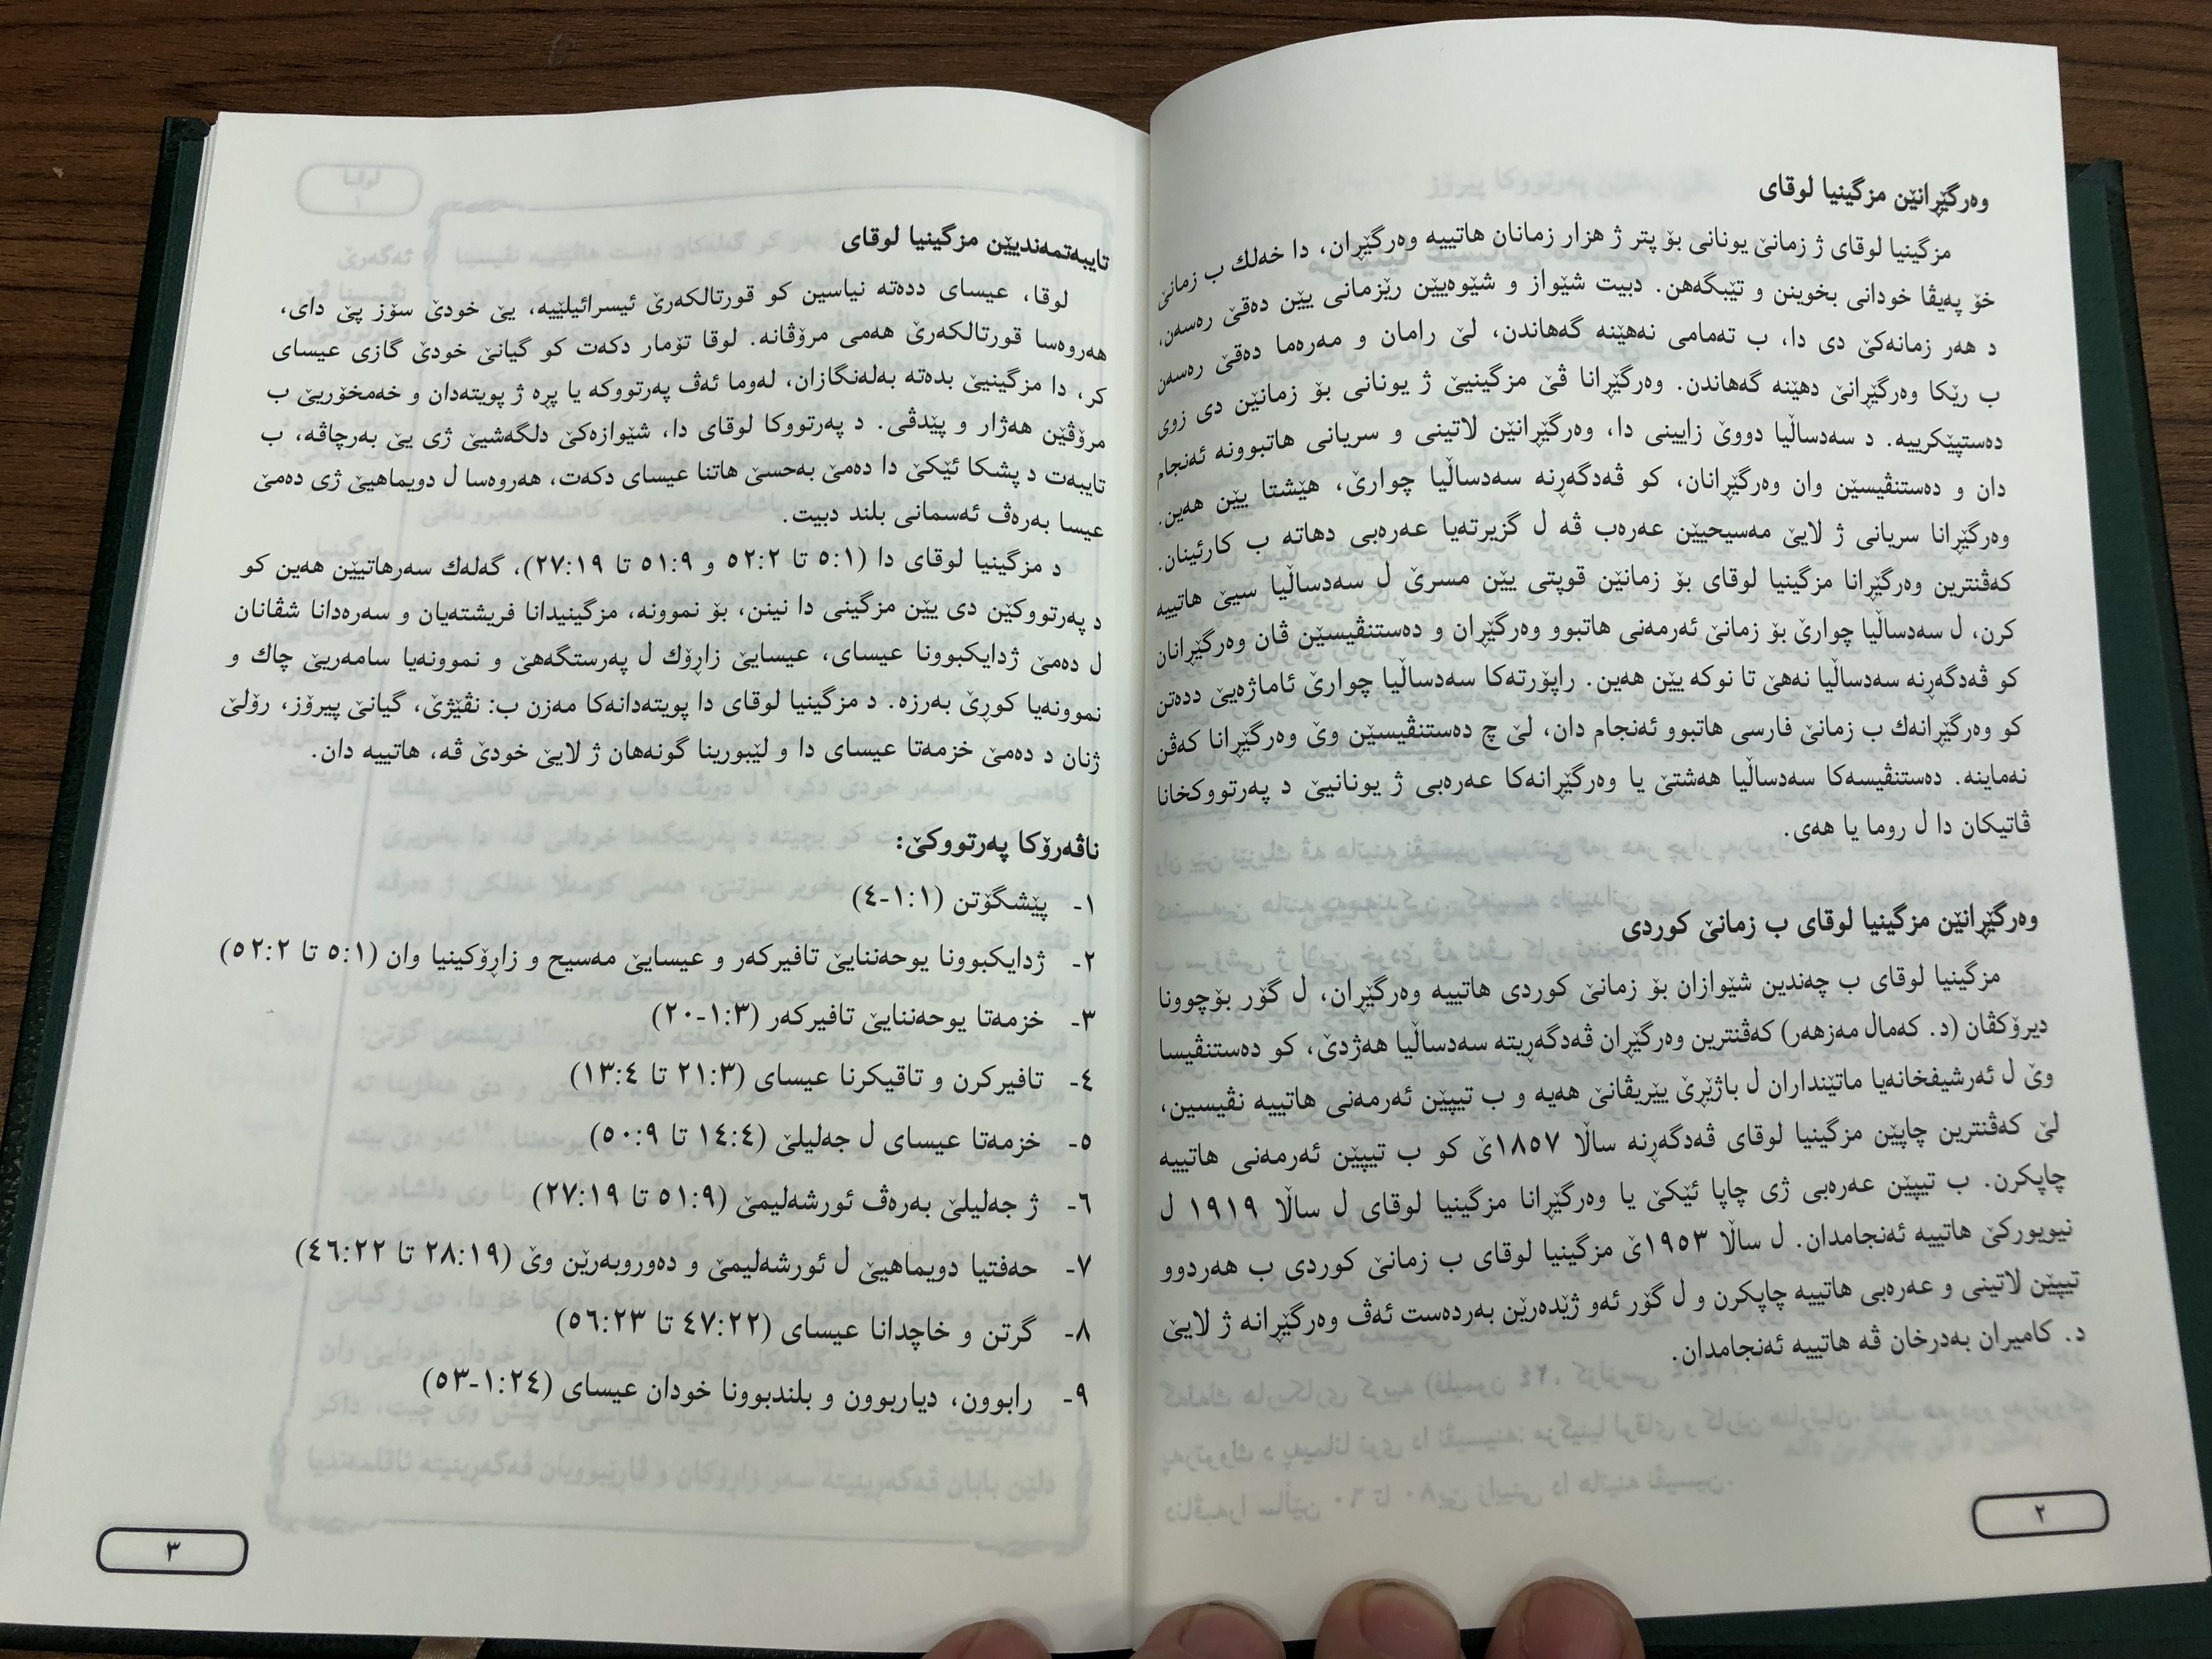 the-gospel-according-to-luke-and-acts-of-the-apostles-in-kurdish-behdini-biblica-ibs-hardcover-2012-6-.jpg